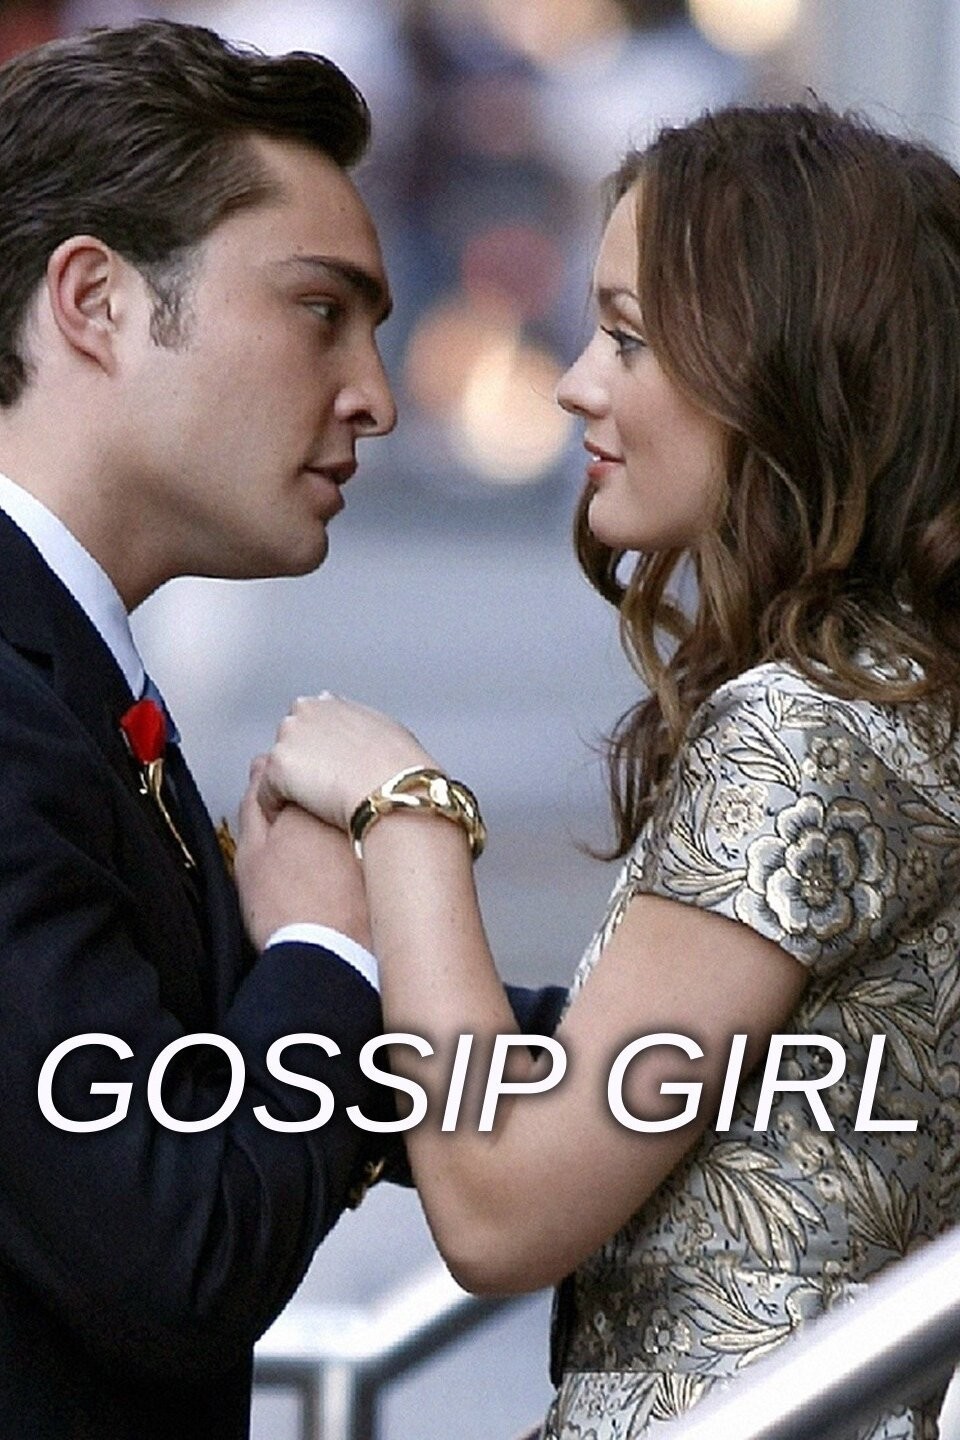 Season 3 premiere of 'Gossip Girl' is a Monday TV pick